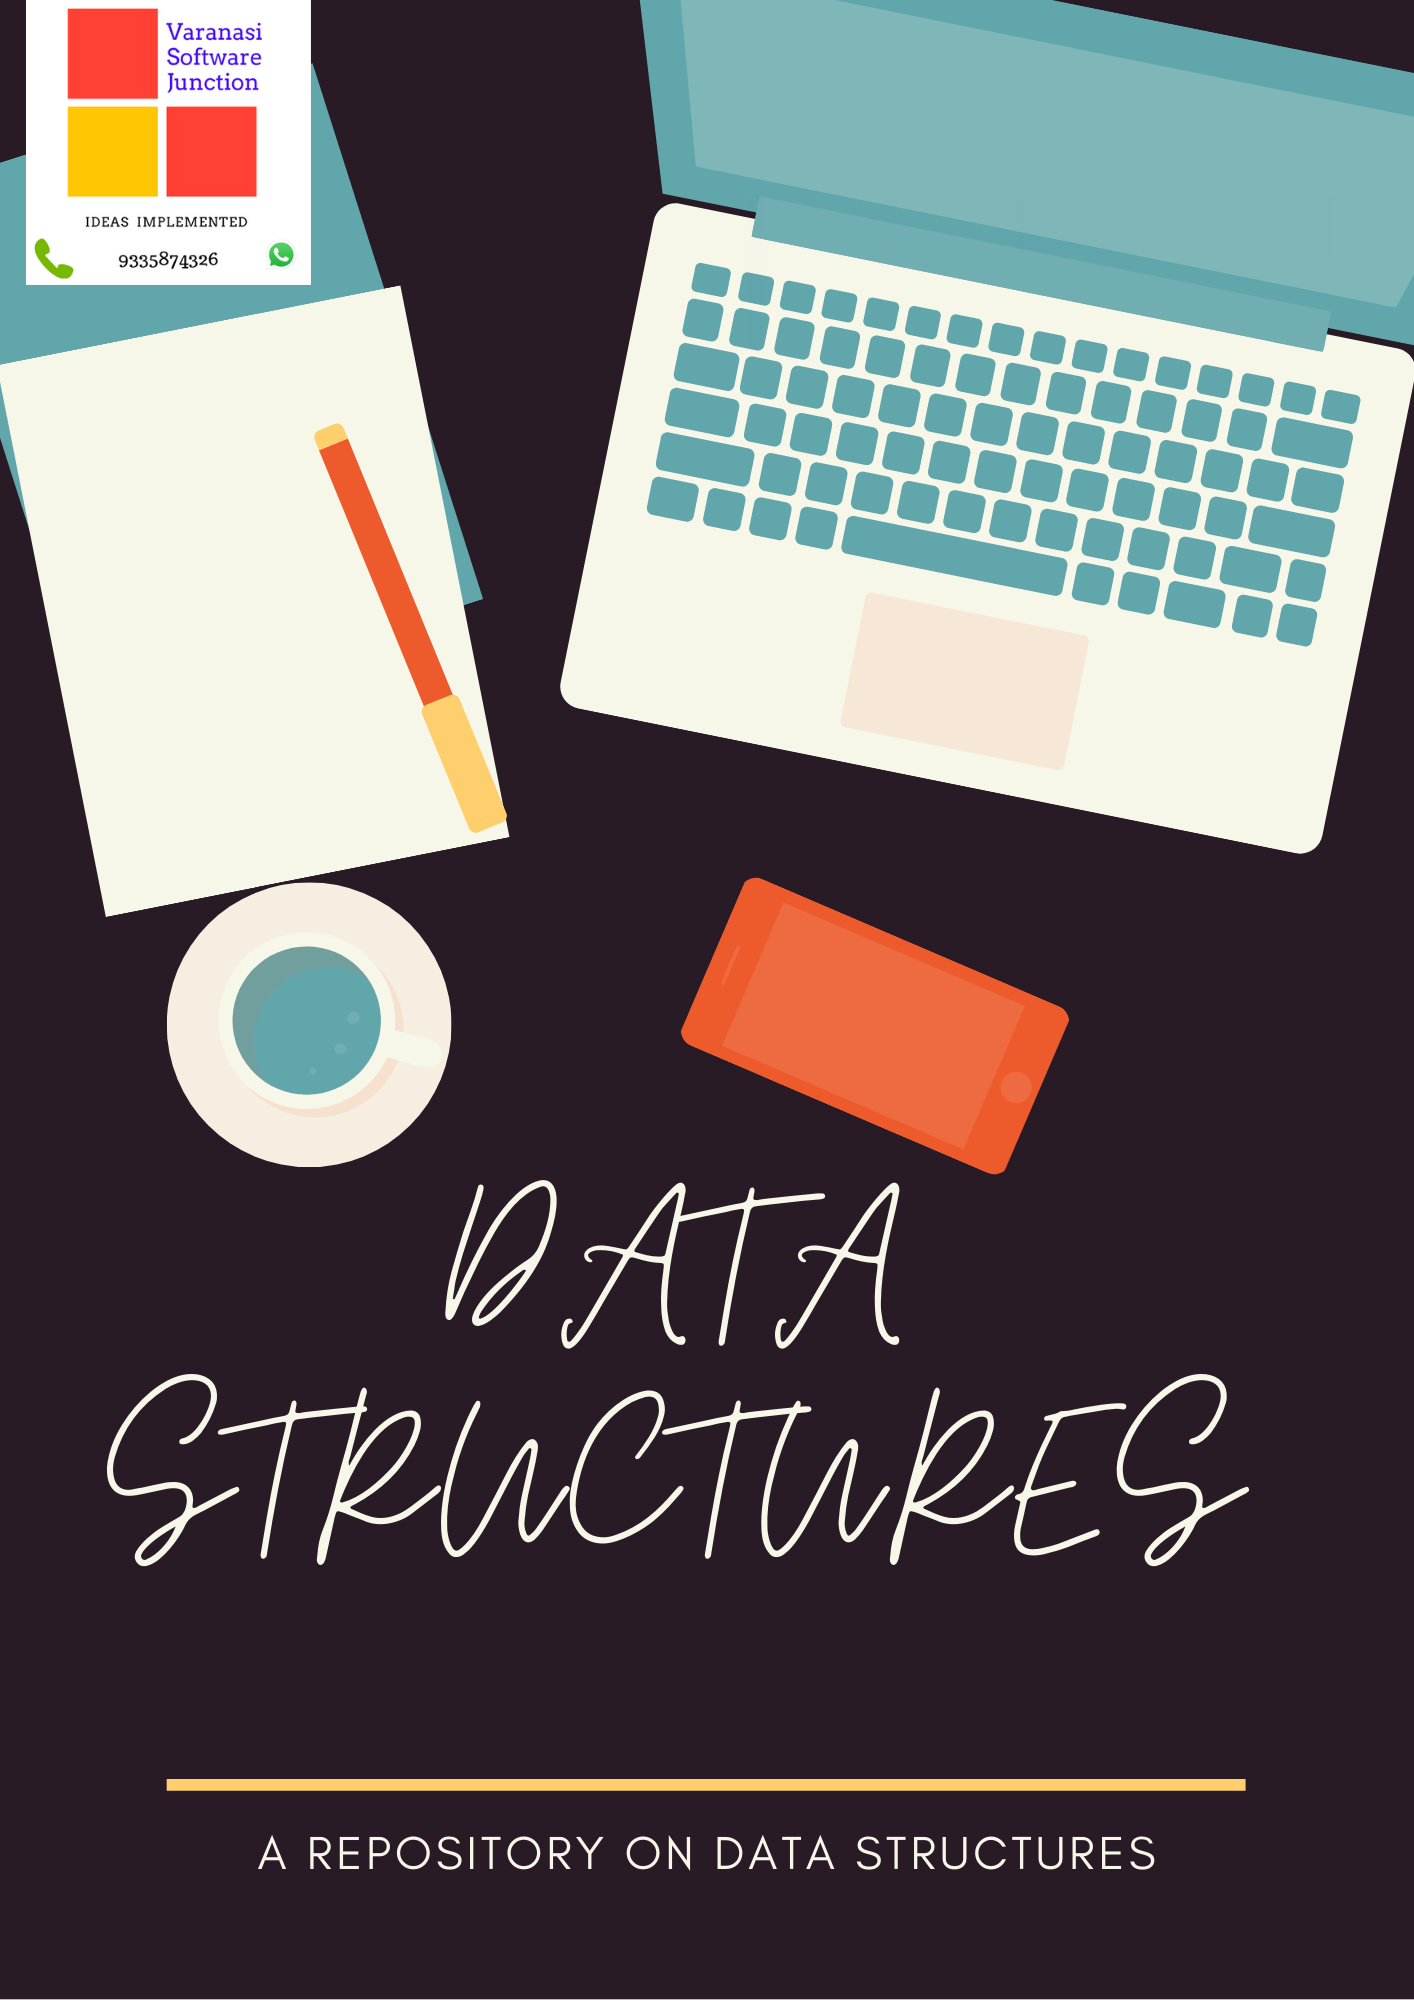 datastructures